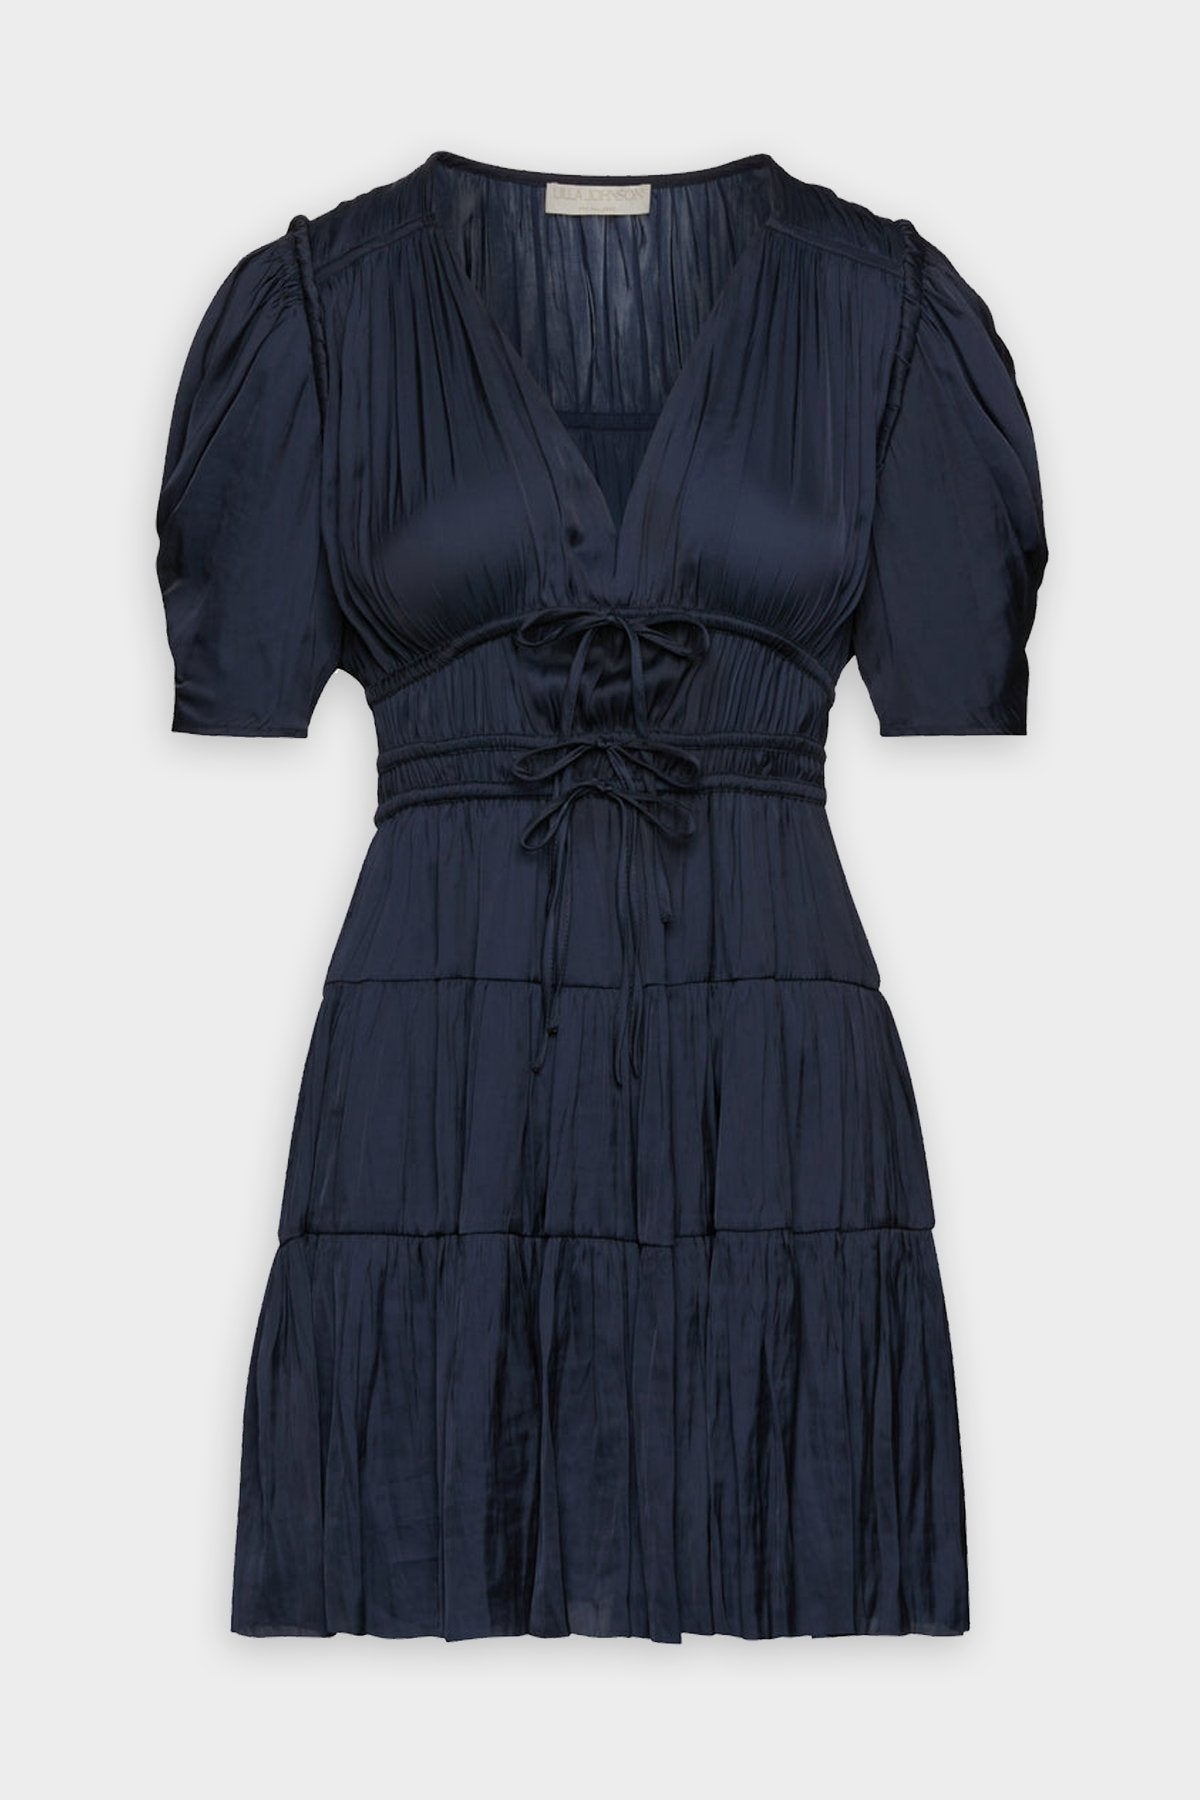 Azaria Dress in Midnight - shop-olivia.com